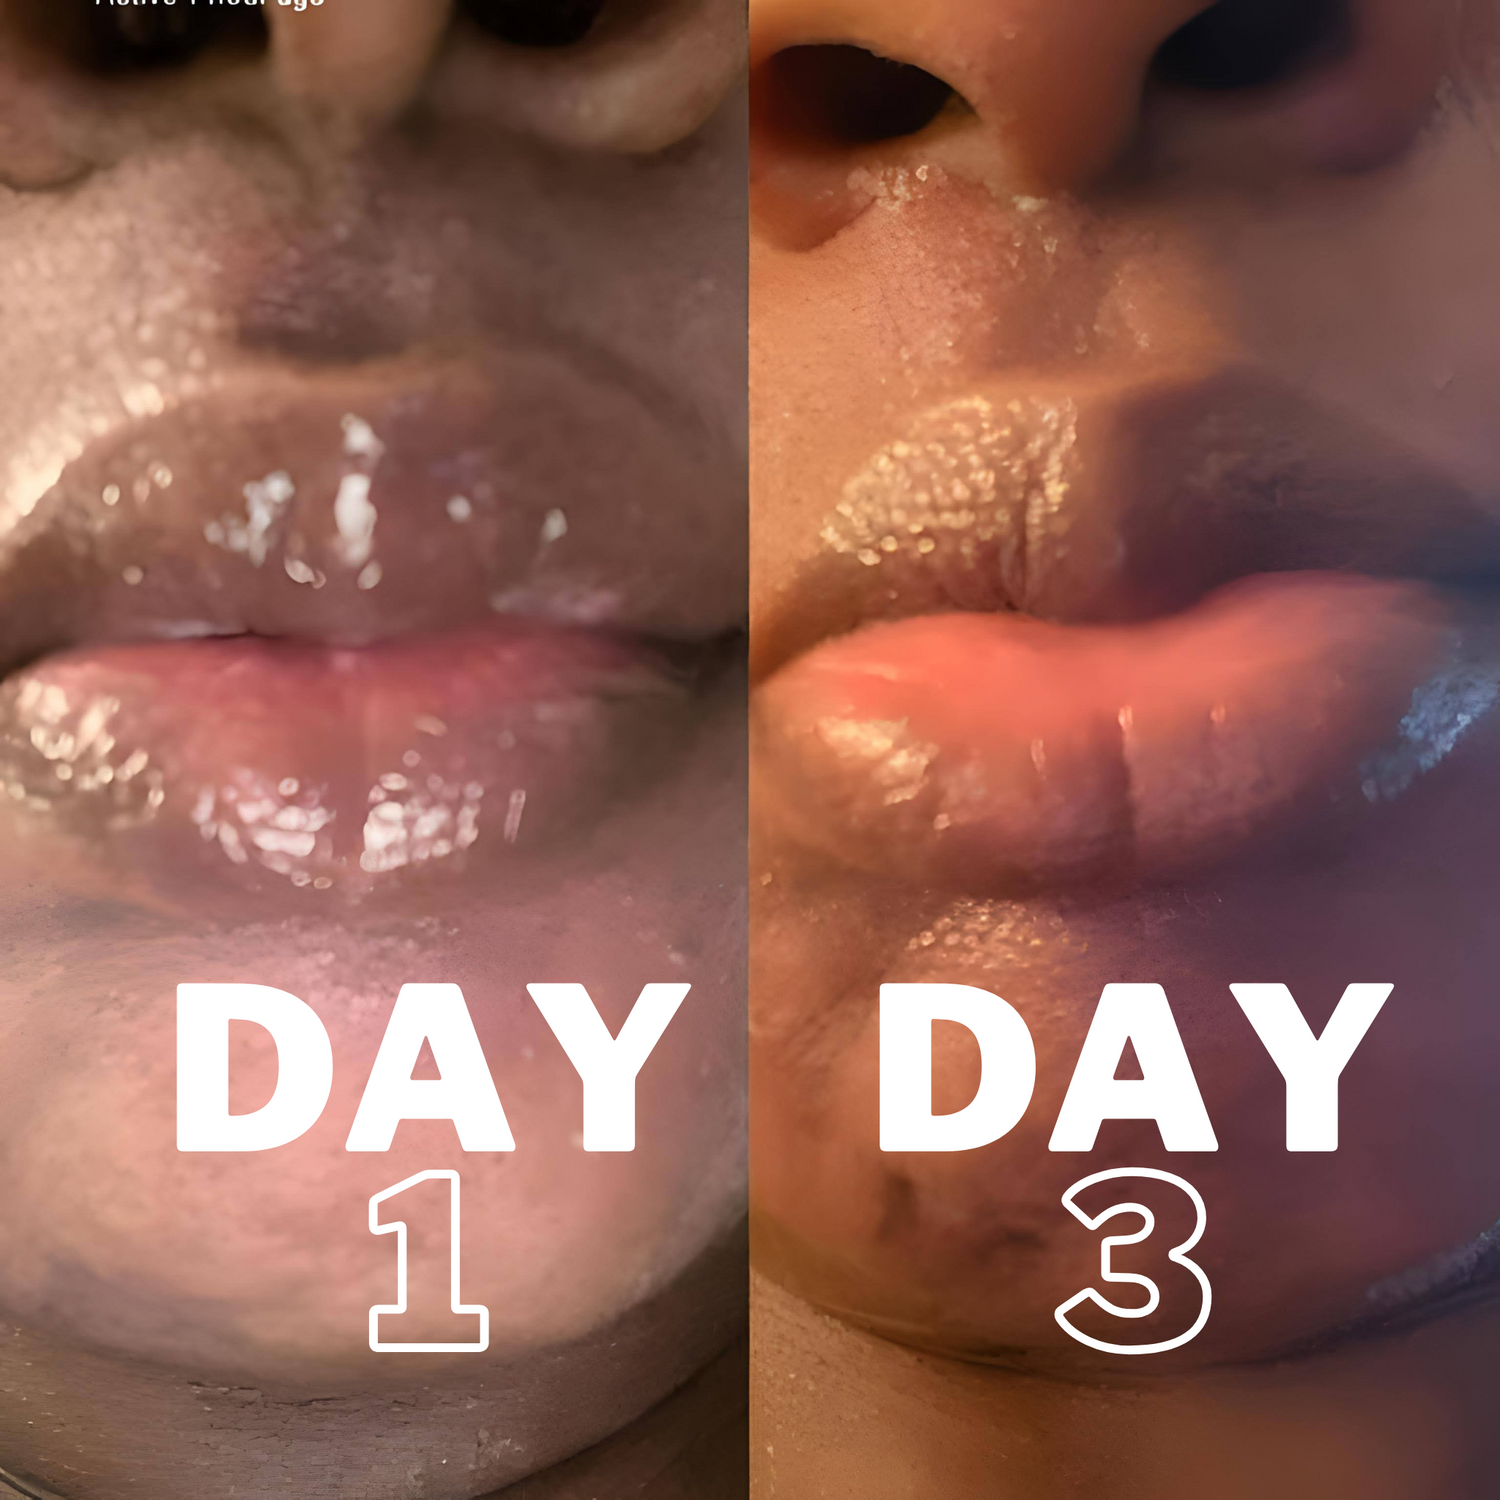 Lip Lightening Balm Lip Balms & Treatments Lip Tease by Dallace    